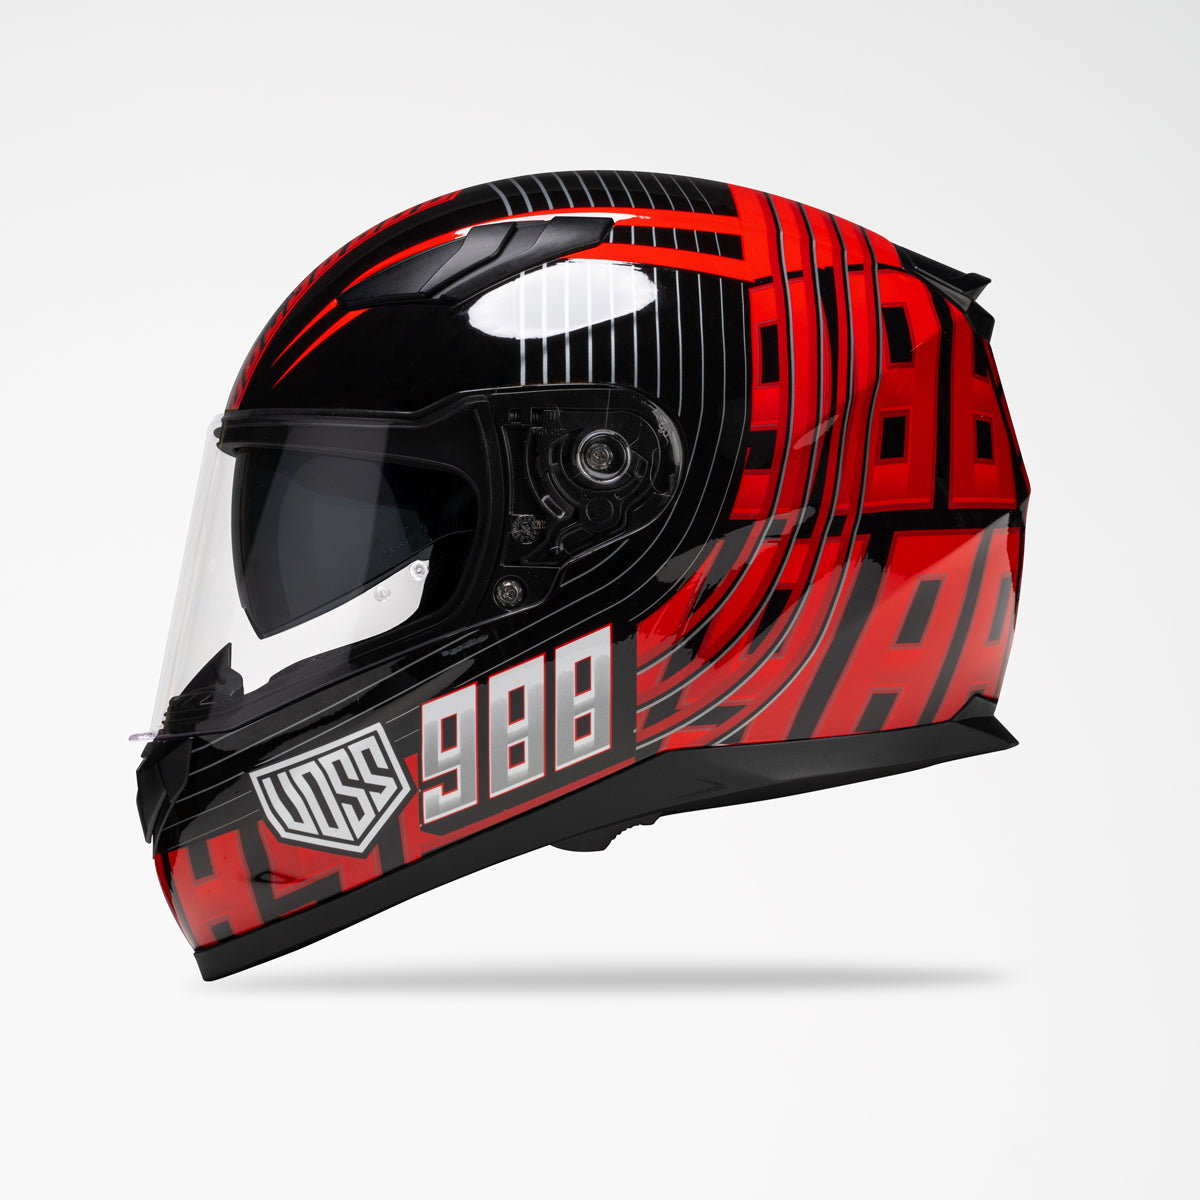 VOSS 988 MOTO-1 RED ECHO HELMET - Voss Helmets